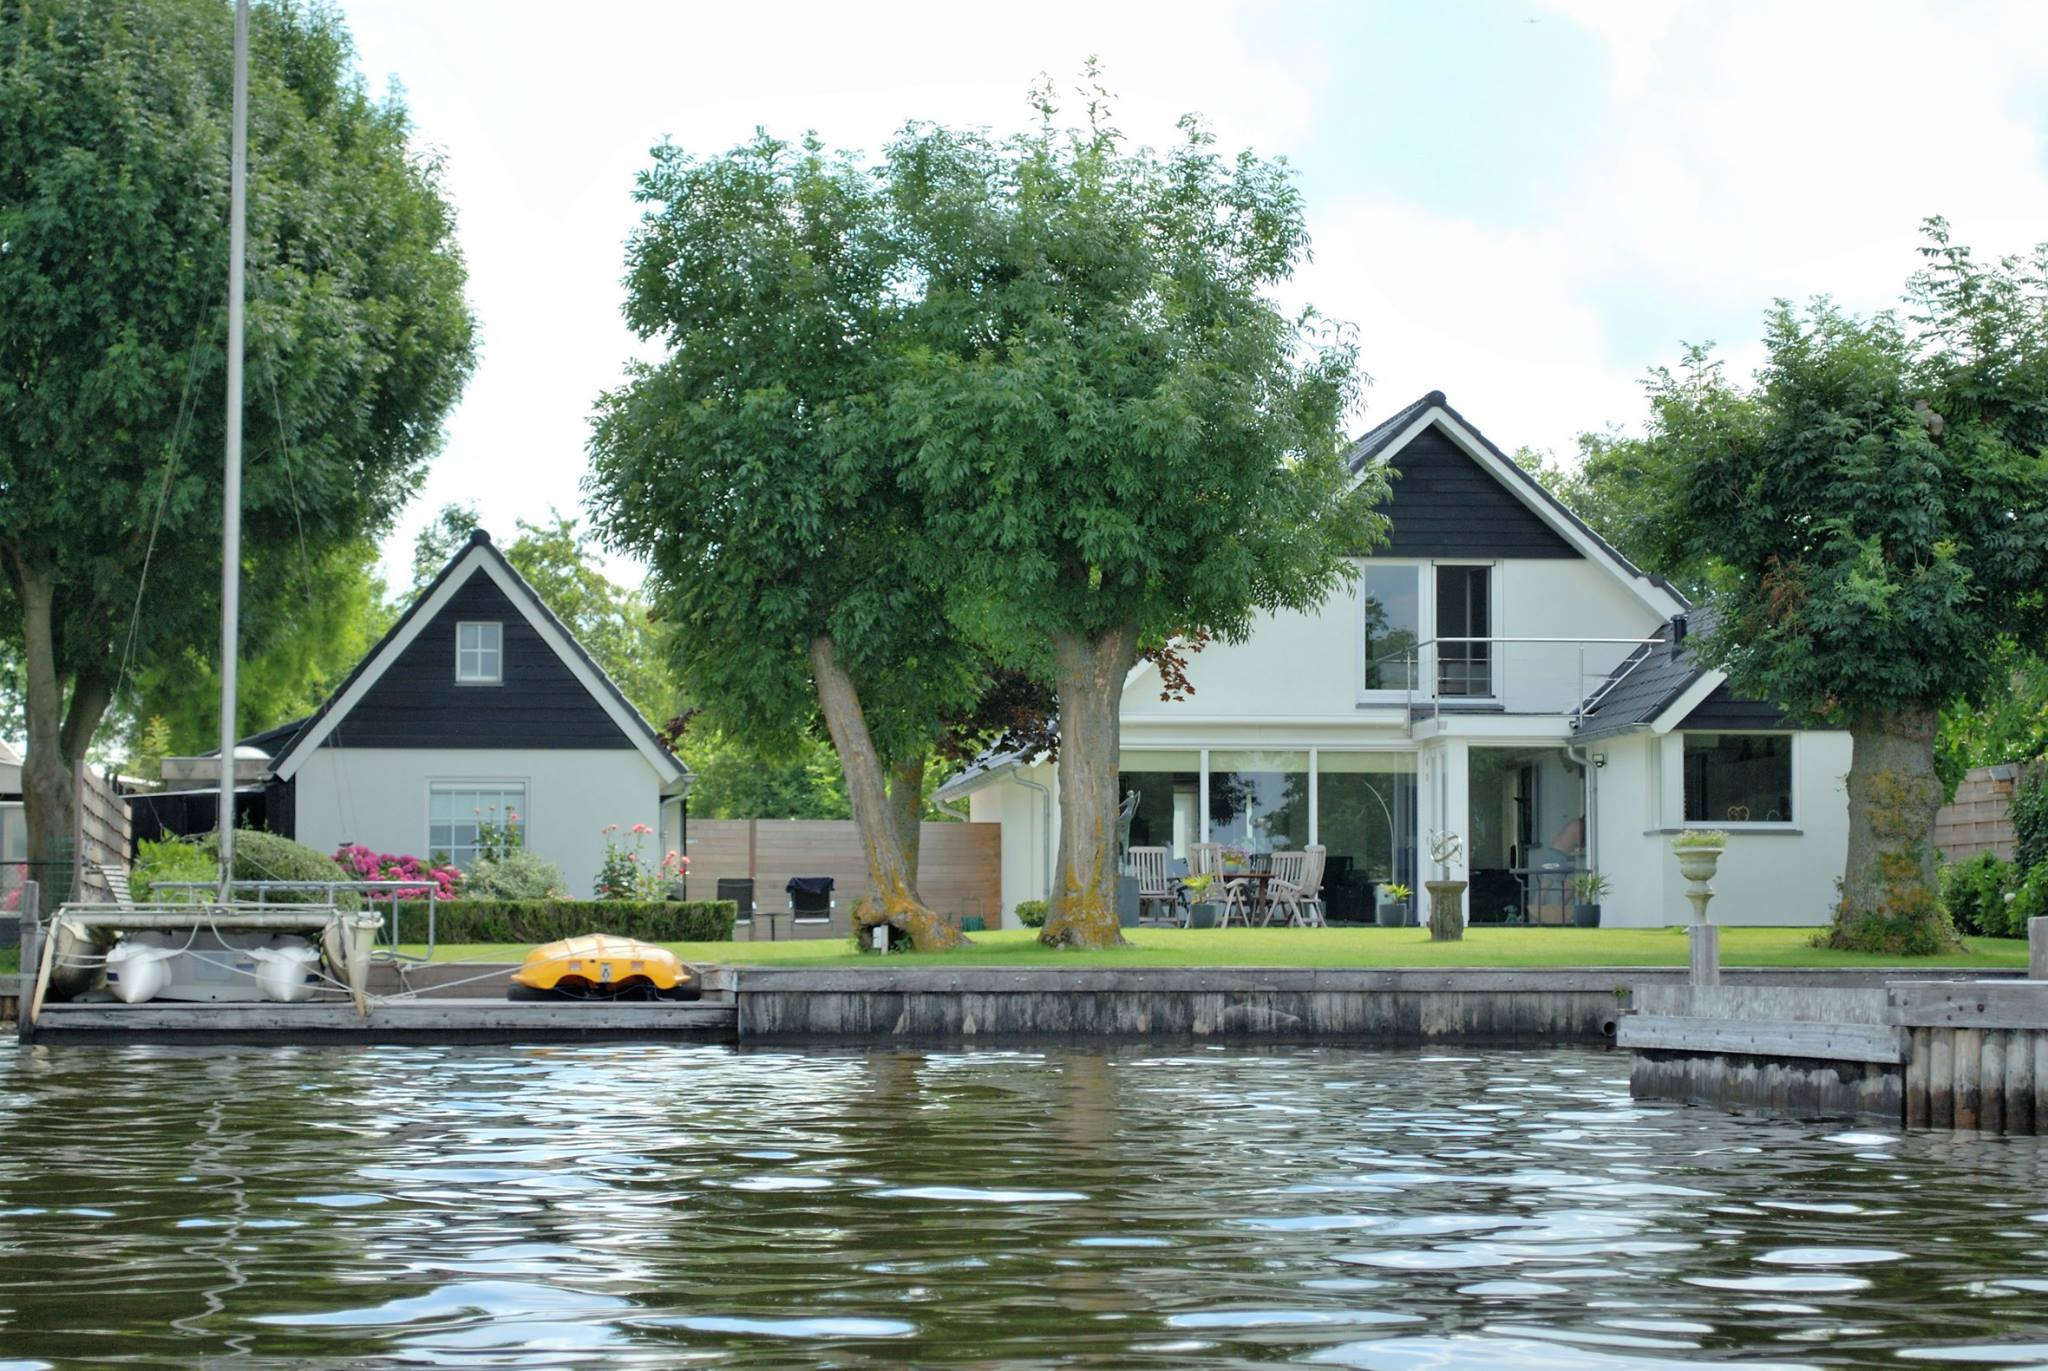 Foto: Wonennl Bouwbedrijf ter Reehorst villa aan het water 3